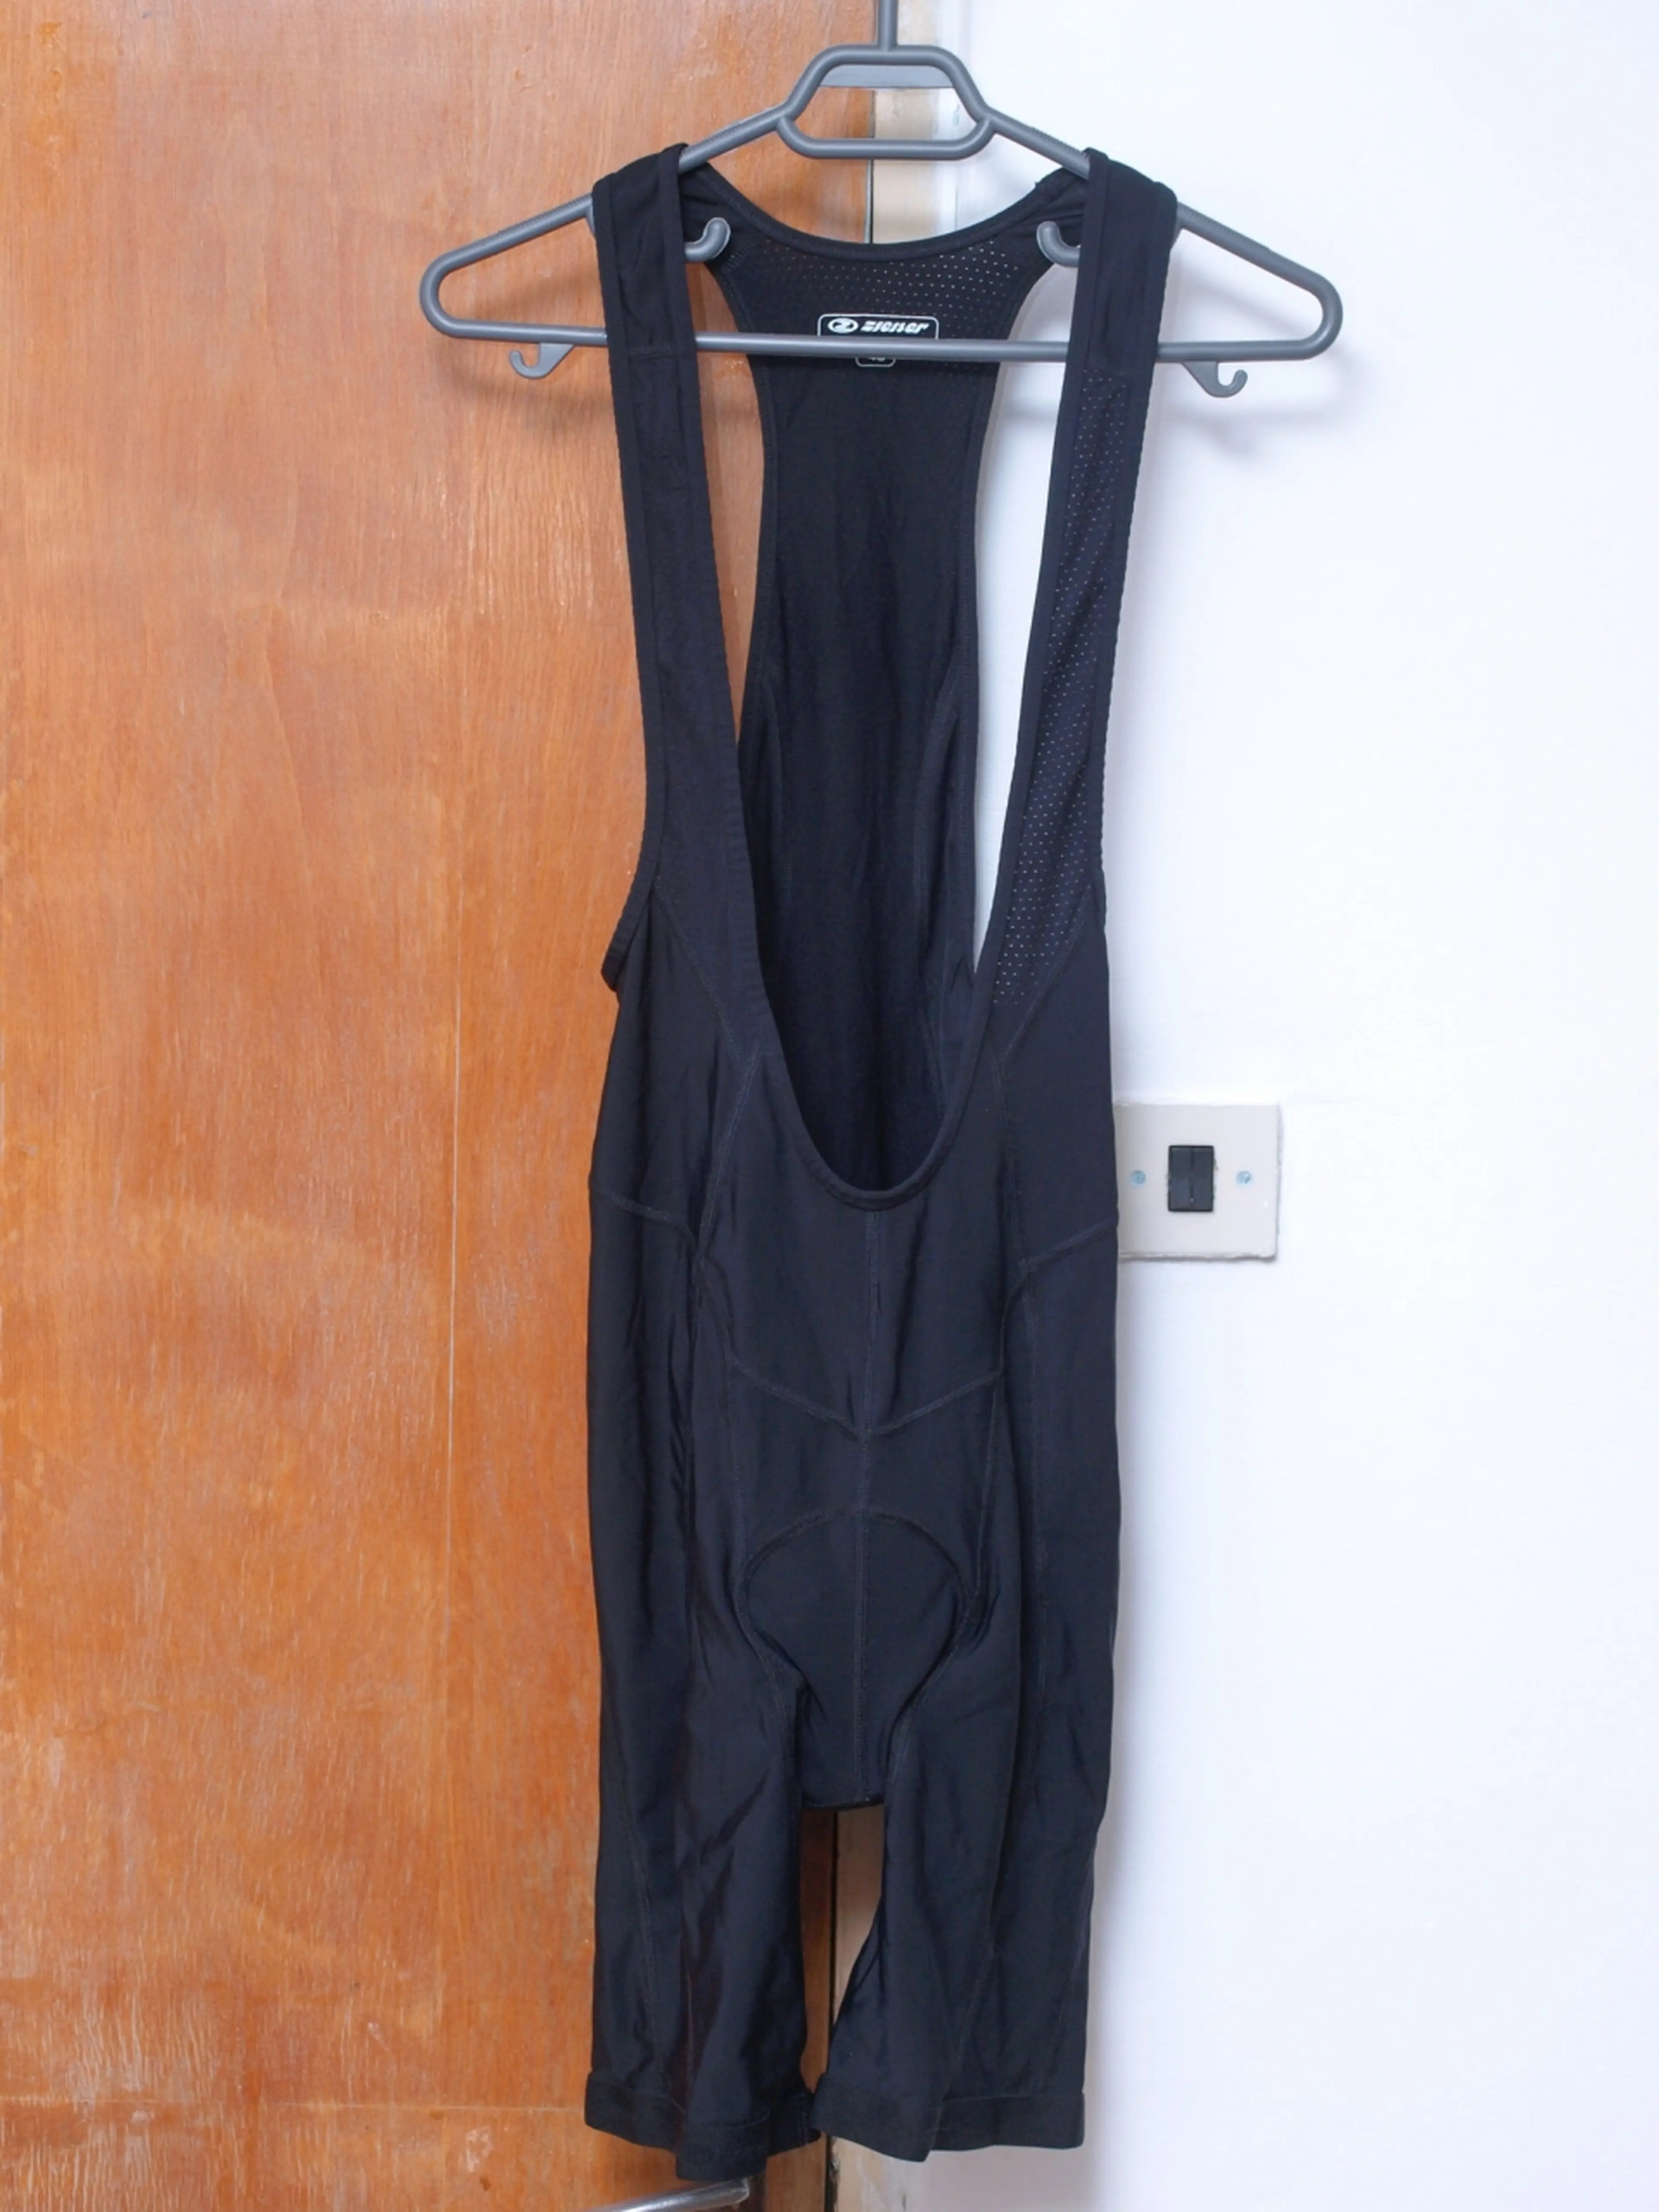 1. Pantaloni scurti Ziener XL